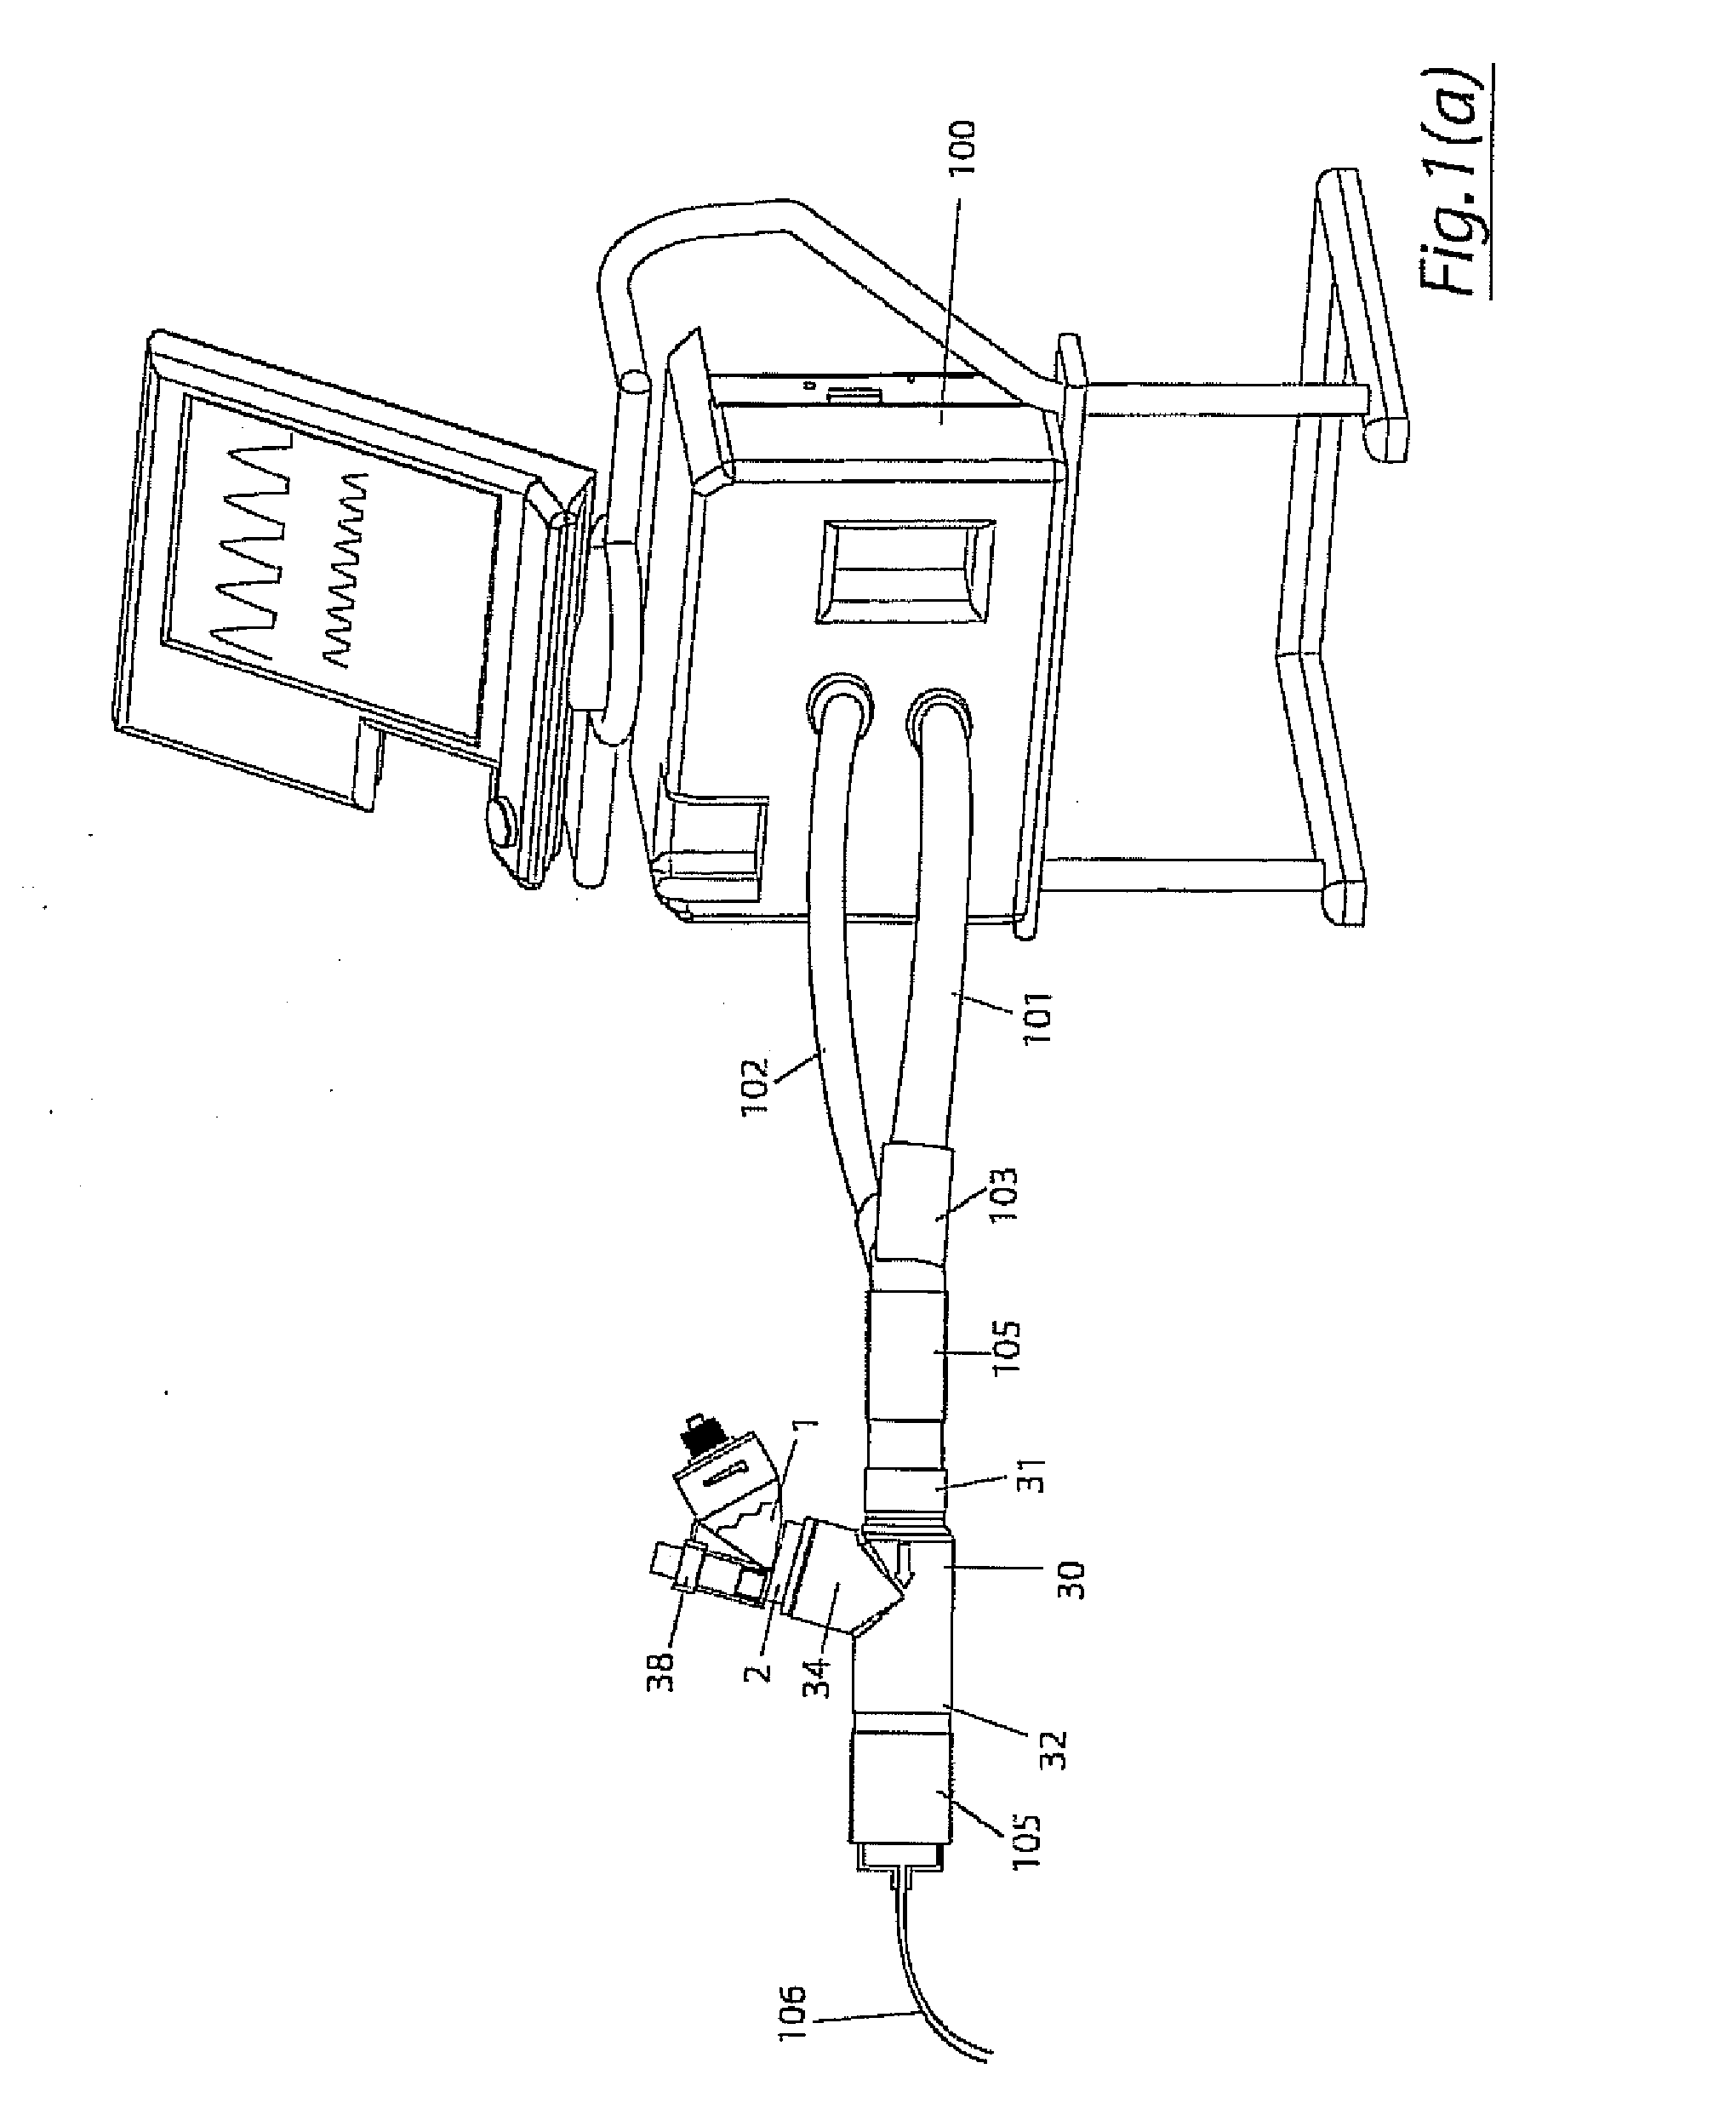 Aerosolisation system